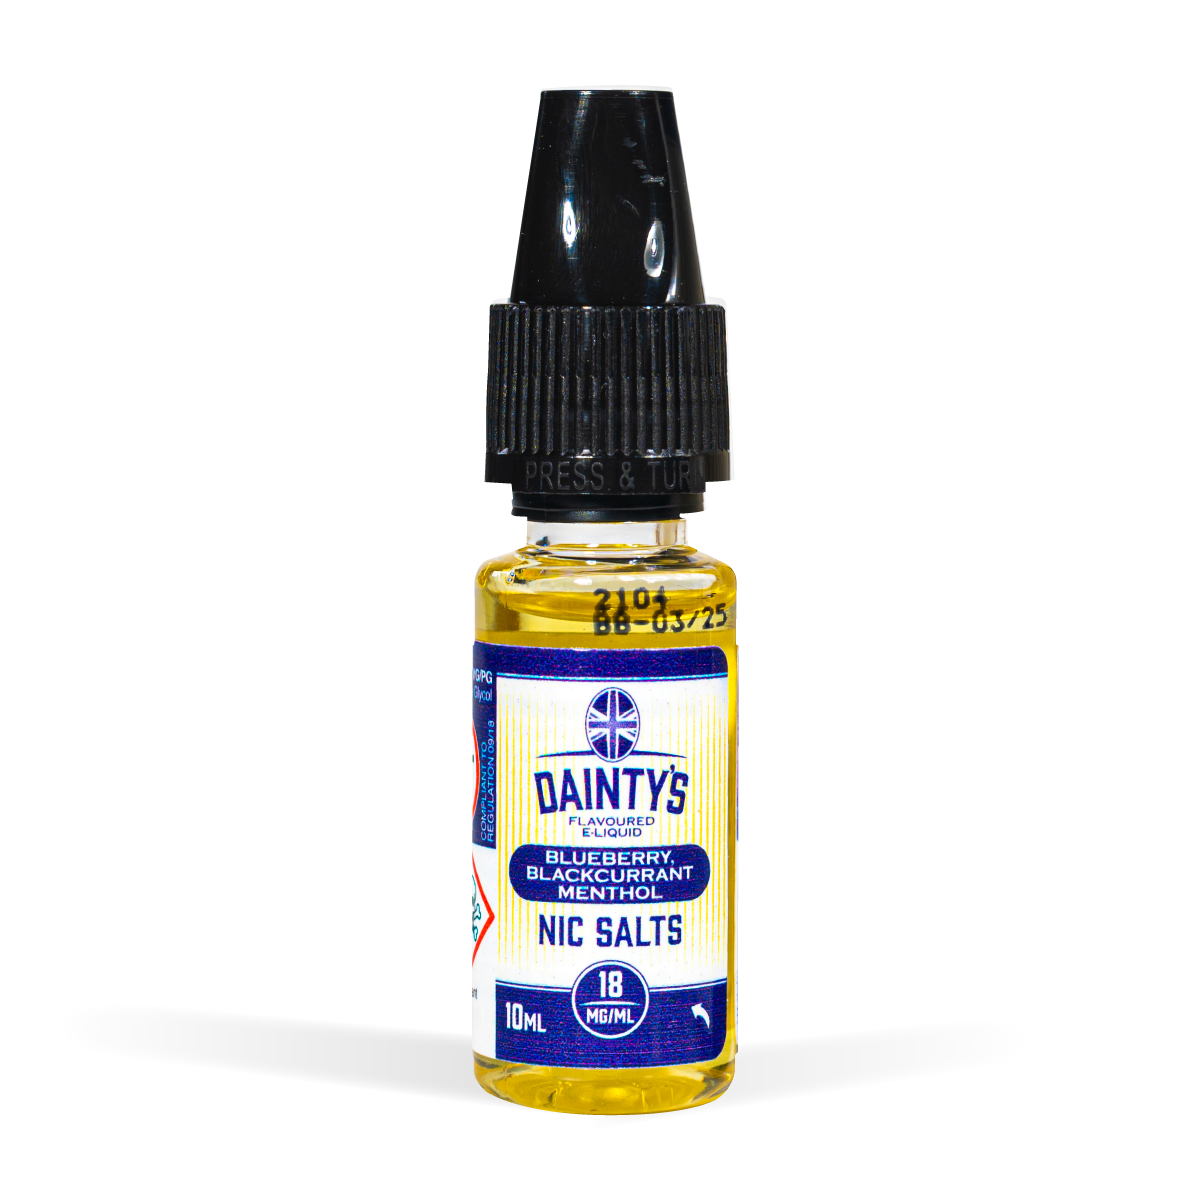 Daintys 10ml nic salt rangę blueberry blackcurrant menthol flavour white background studio shot